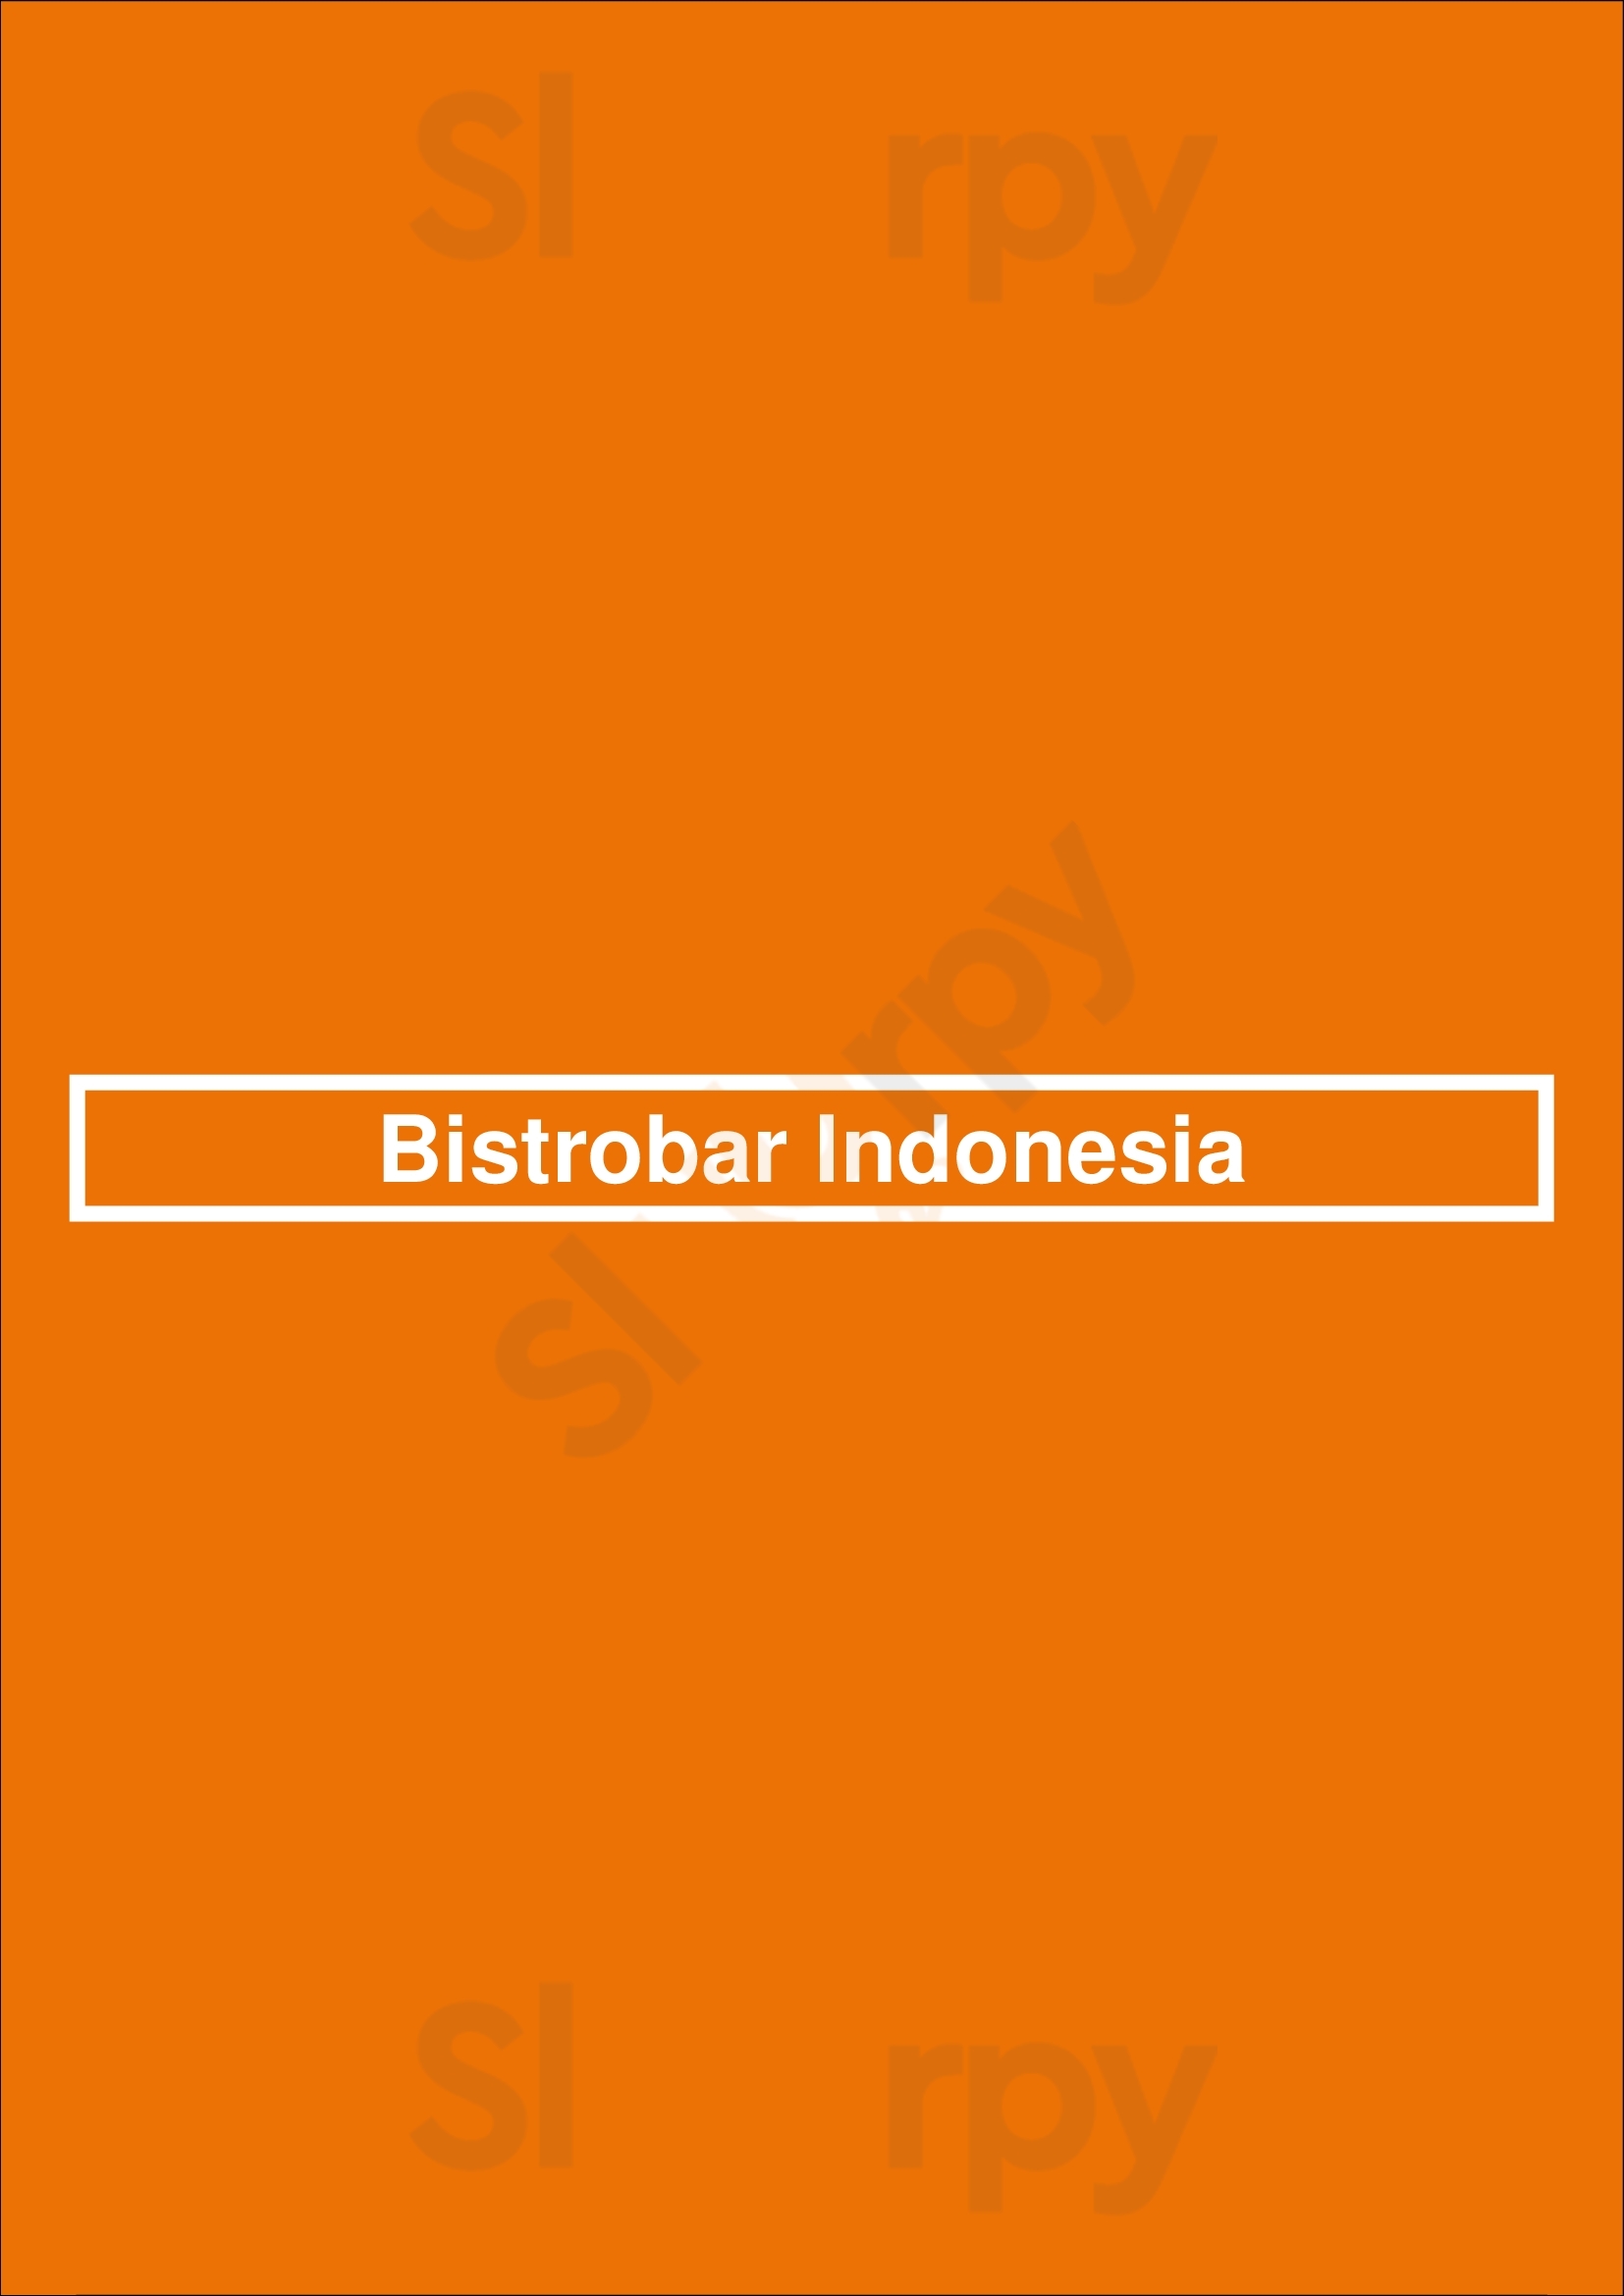 Bistrobar Indonesia Haarlem Menu - 1